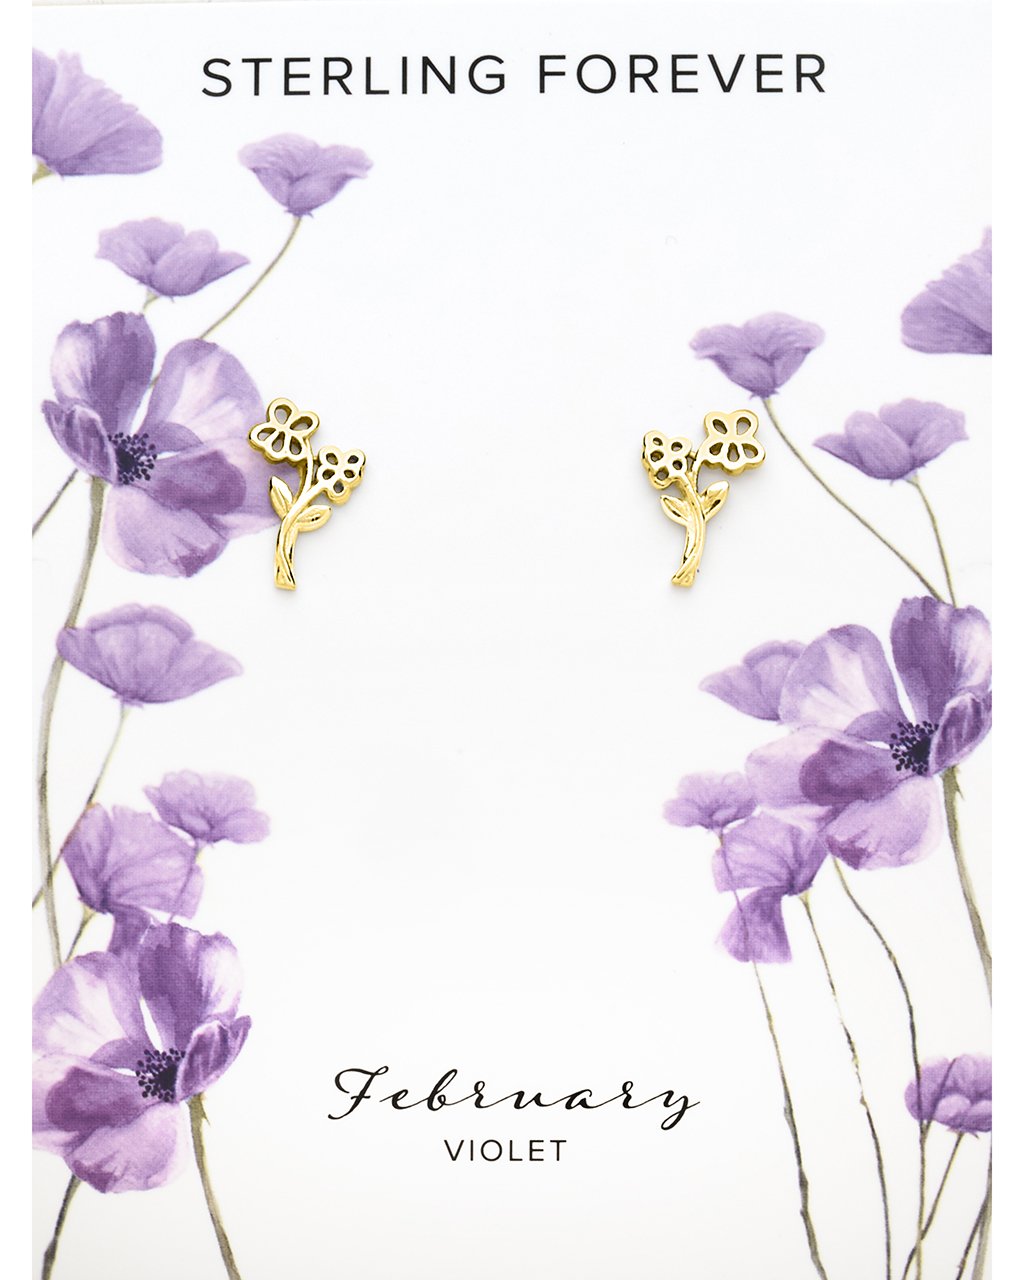 Sterling Silver Birth Flower Studs Earring Sterling Forever Gold February / Violet 